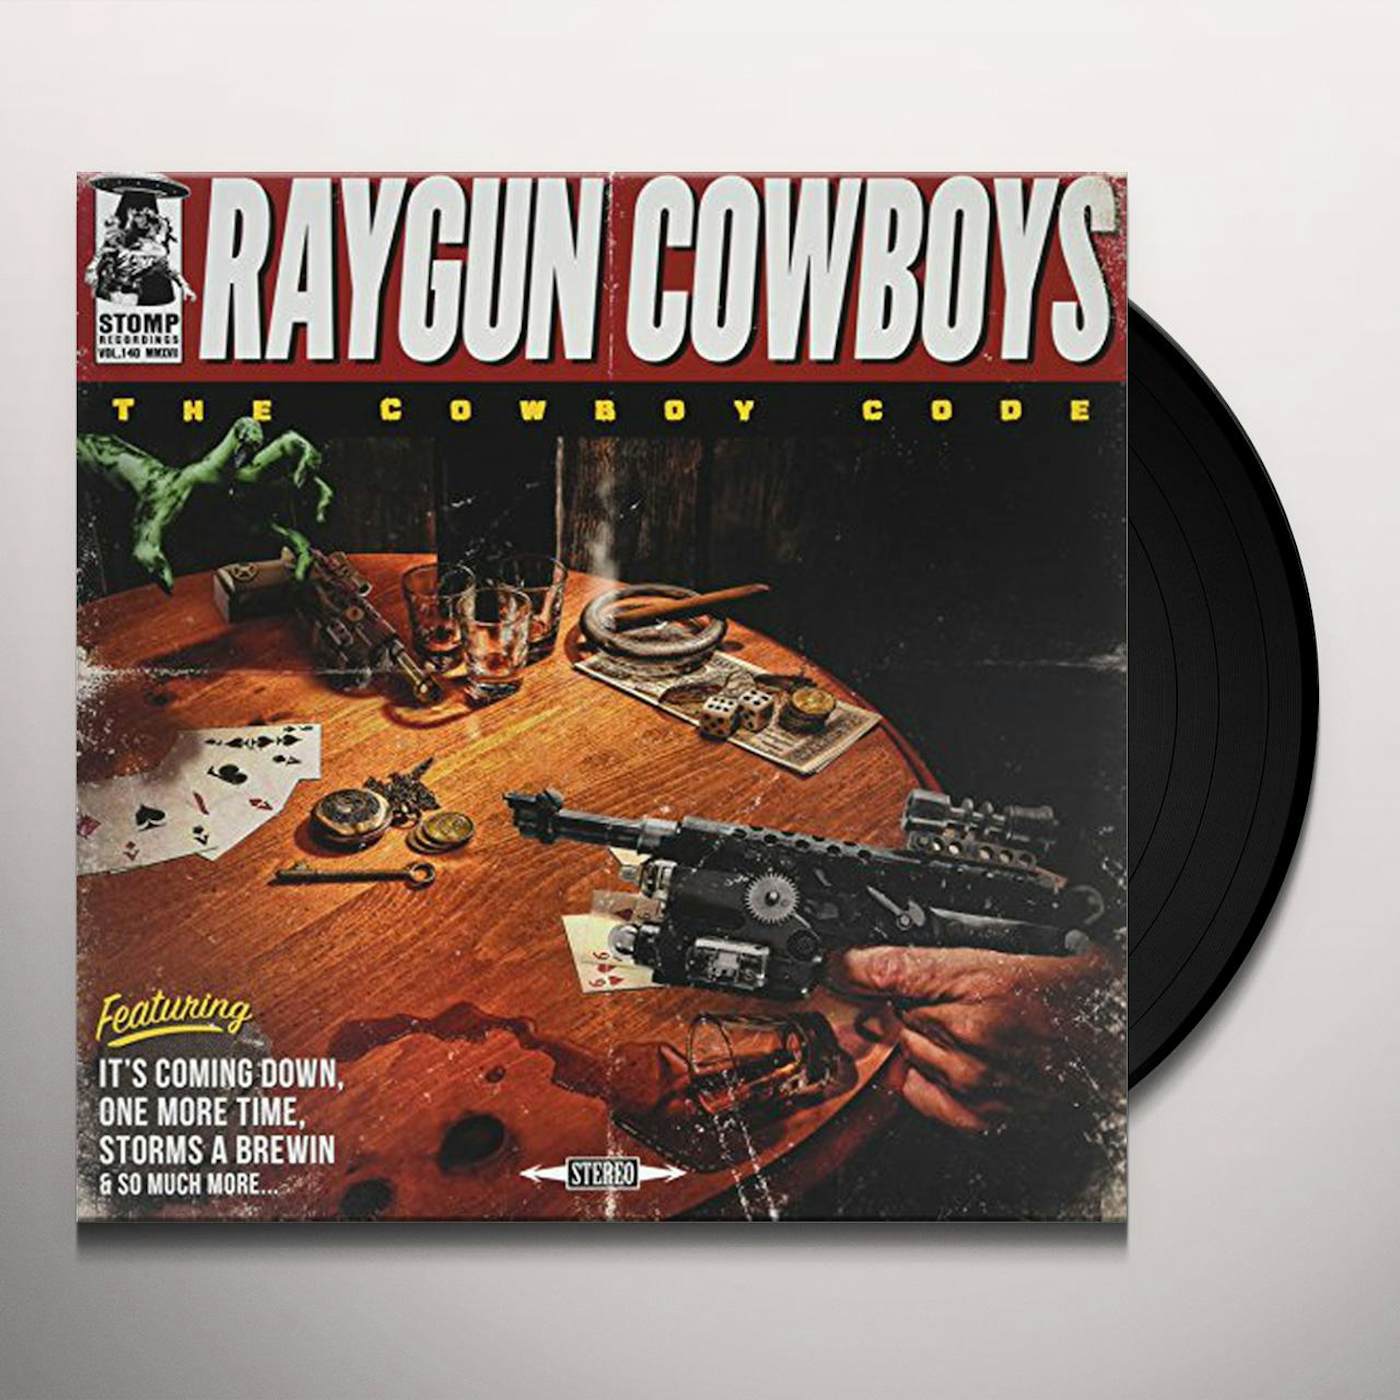 Raygun Cowboys COWBOY CODE Vinyl Record